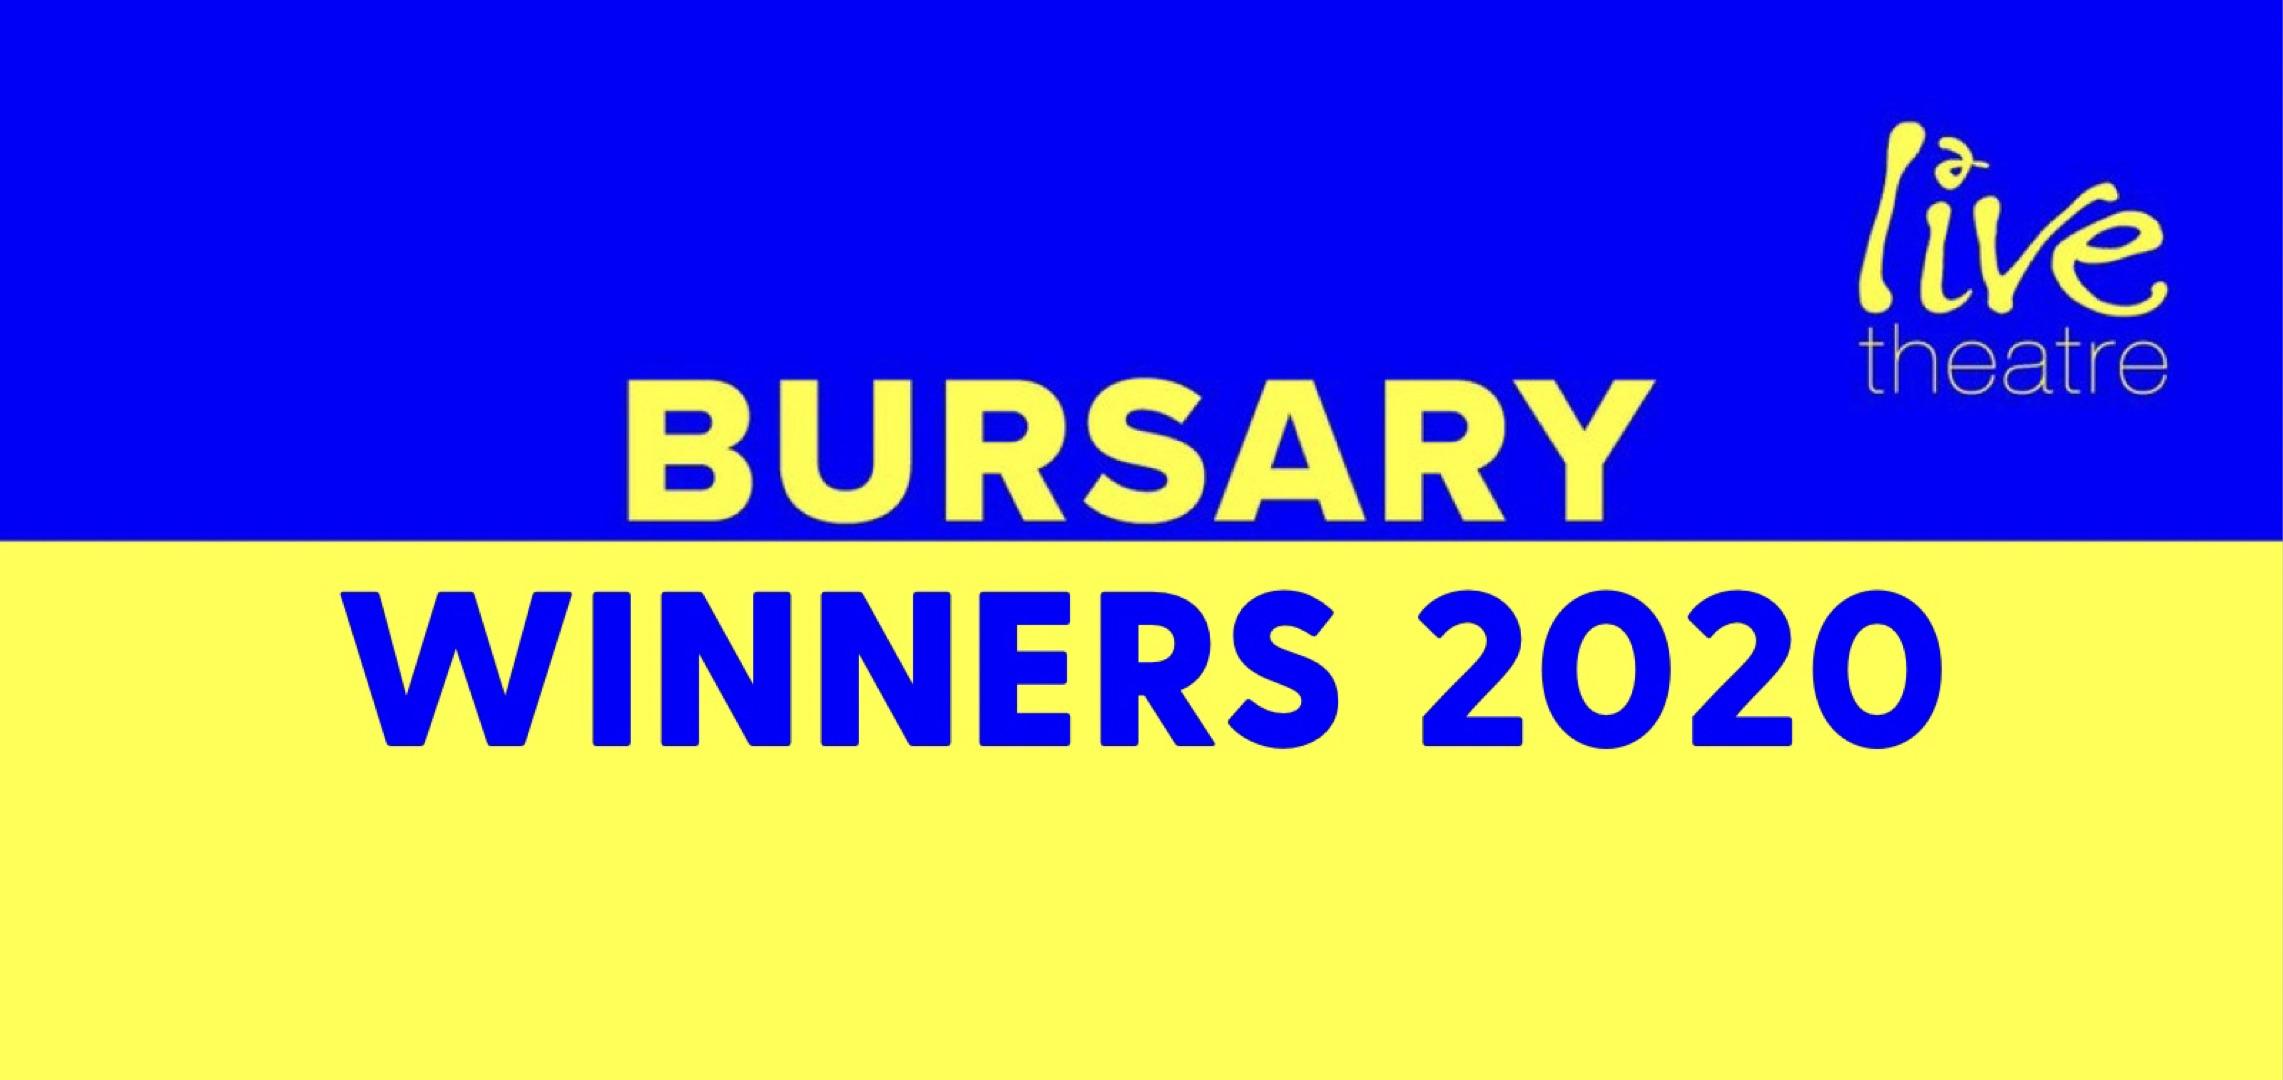 Bursary Winners 2020 text